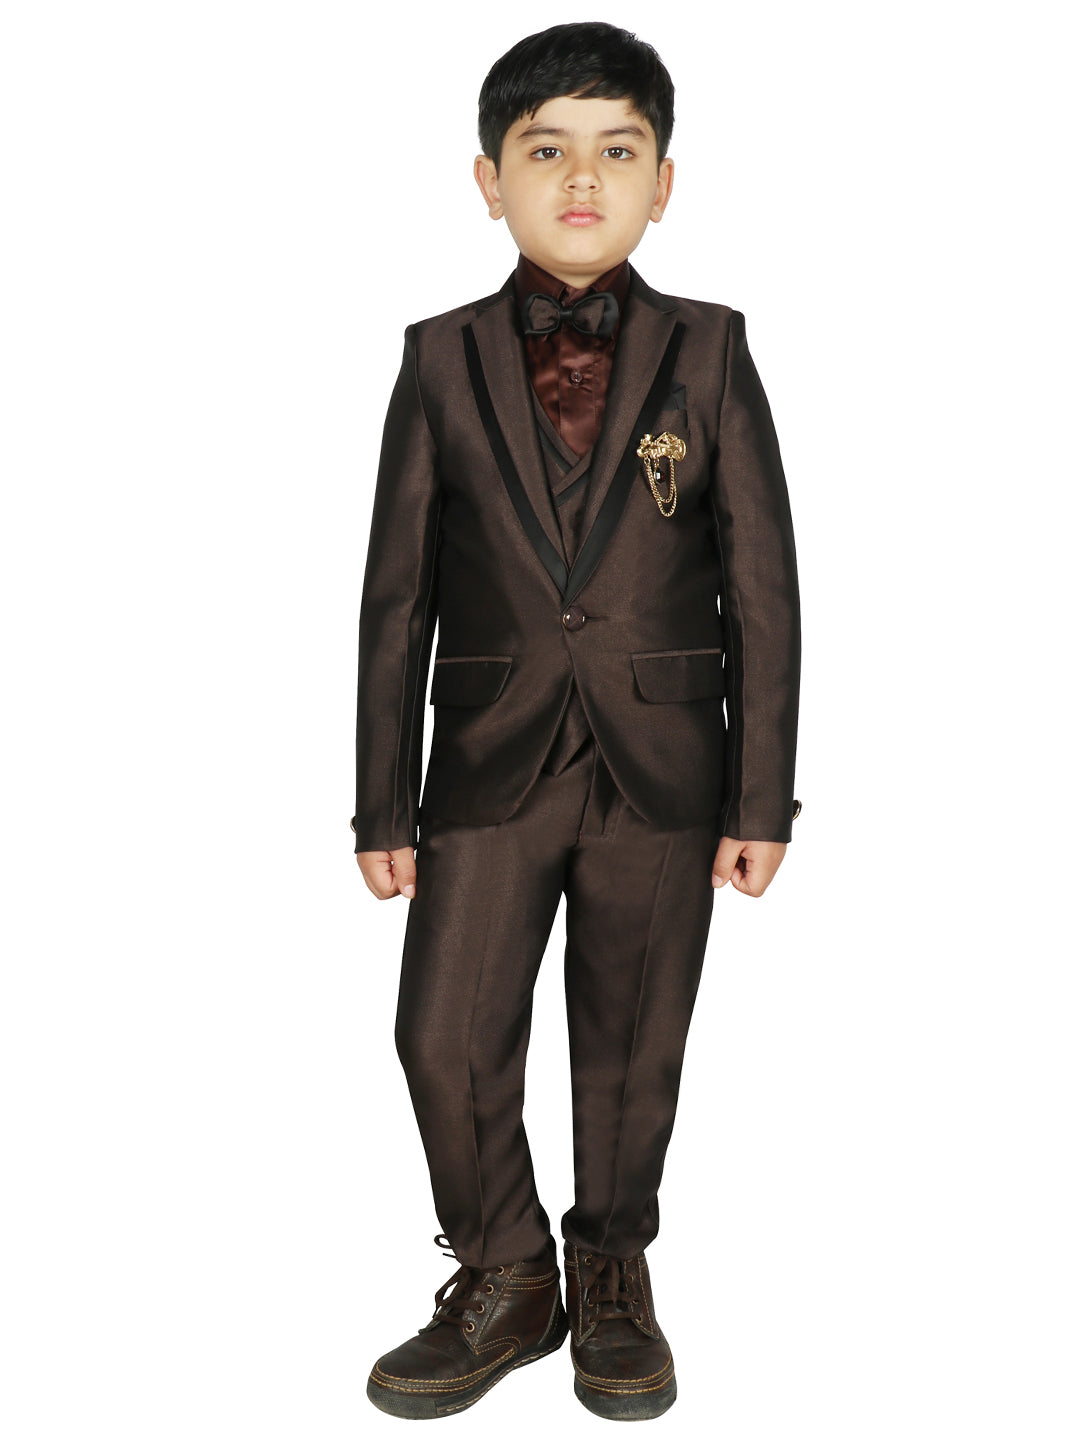 SG YUVRAJ Suits & Sets For Boys (TP-1054)